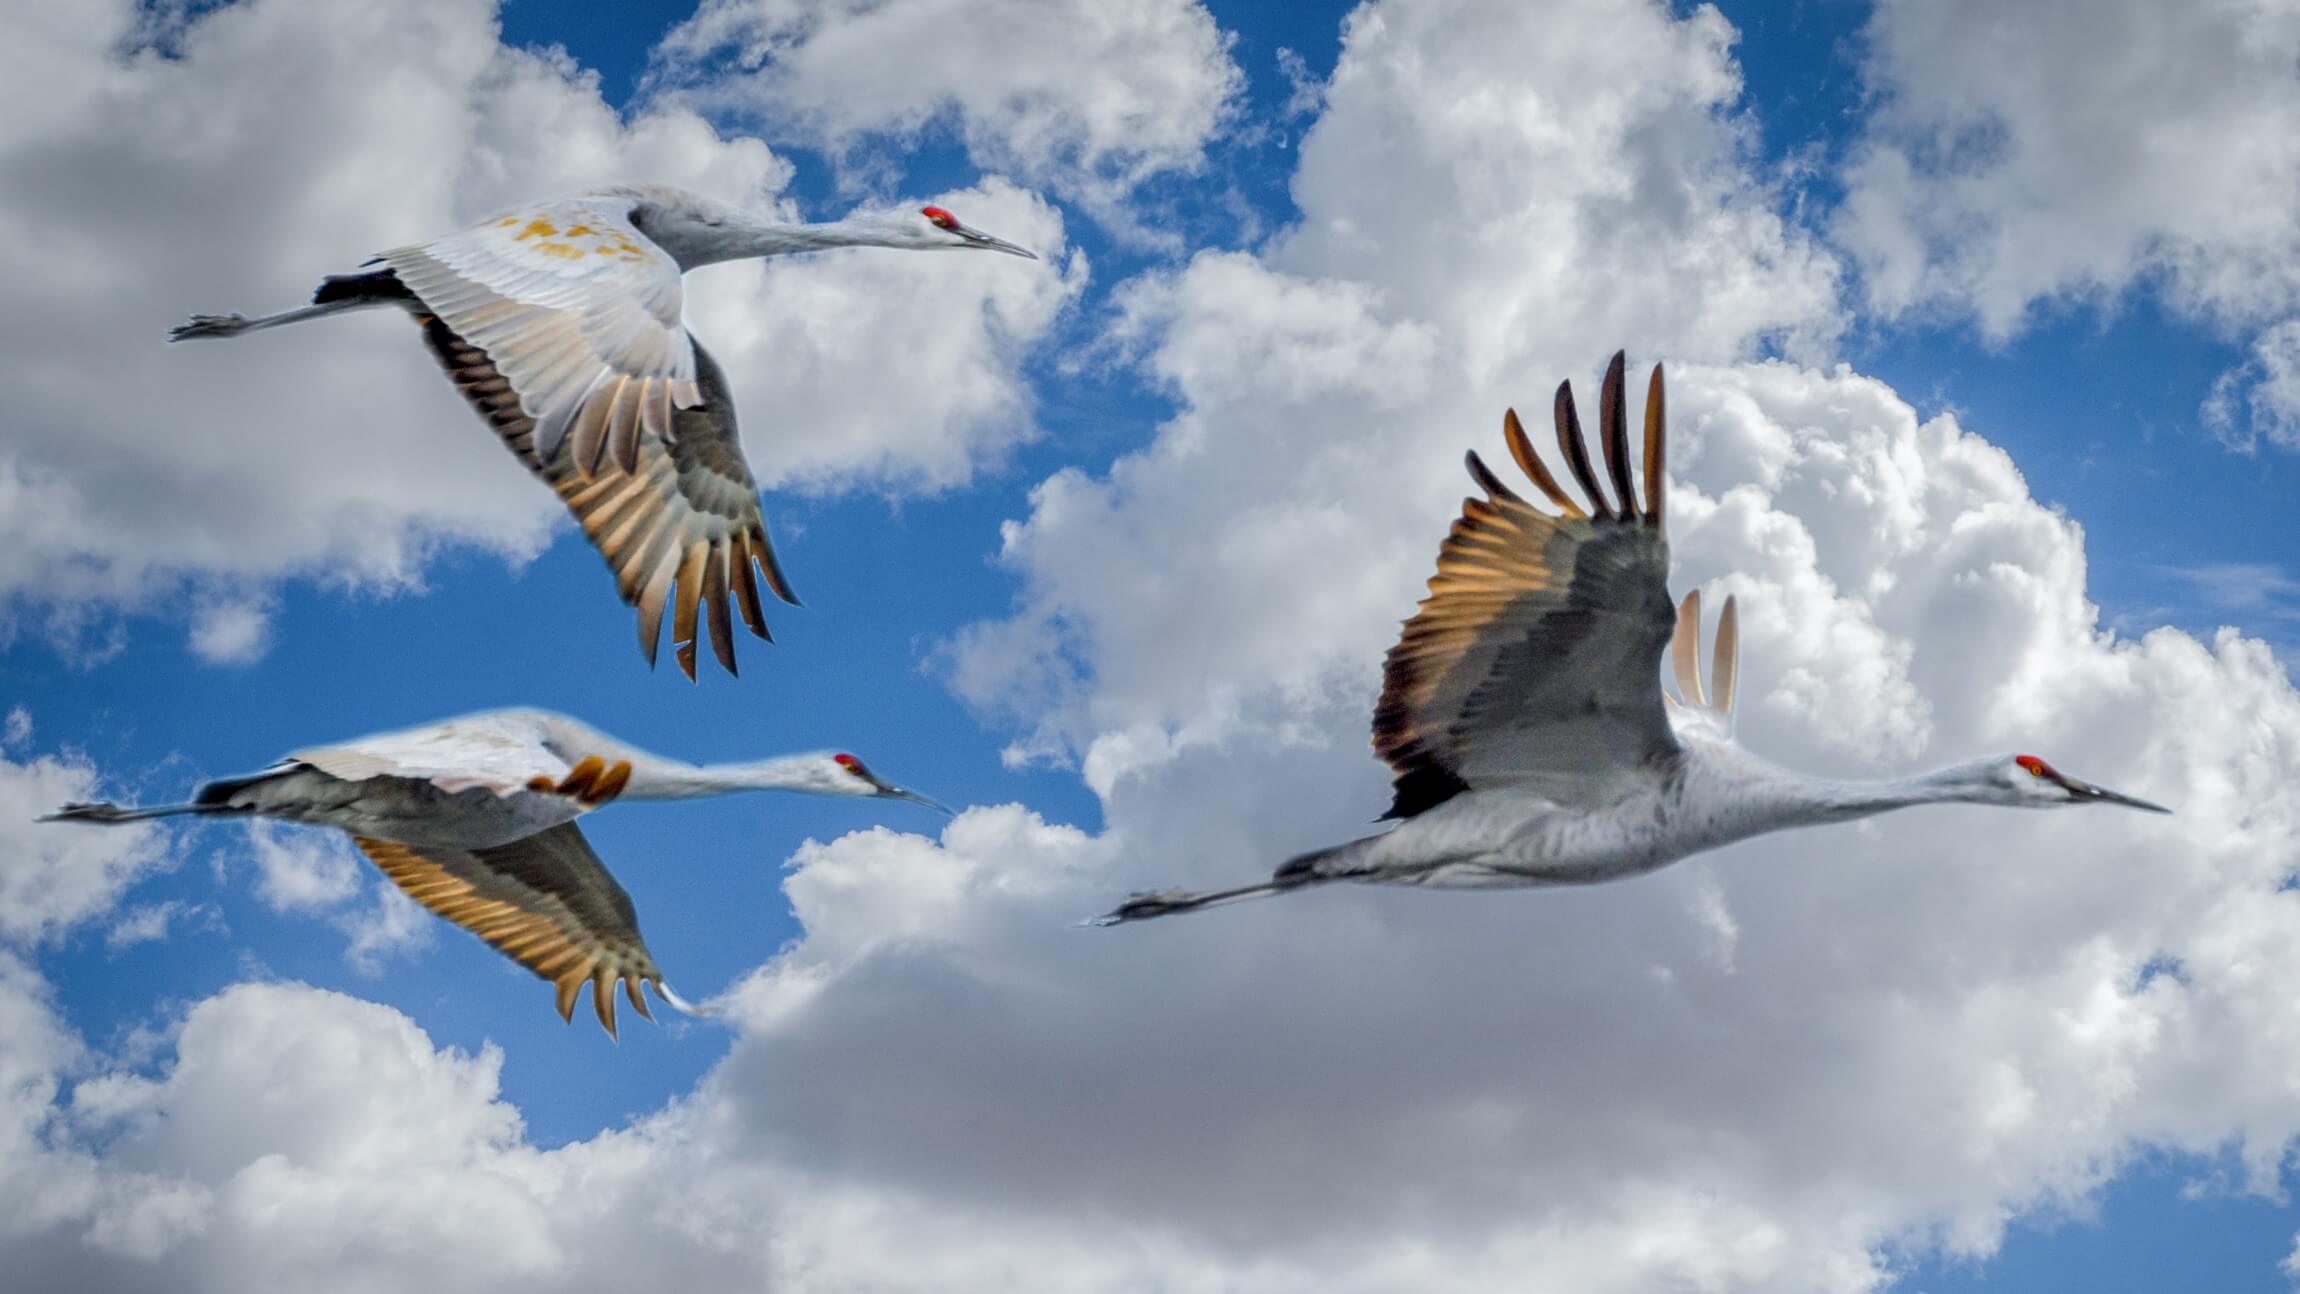 Image of 3 birds flying